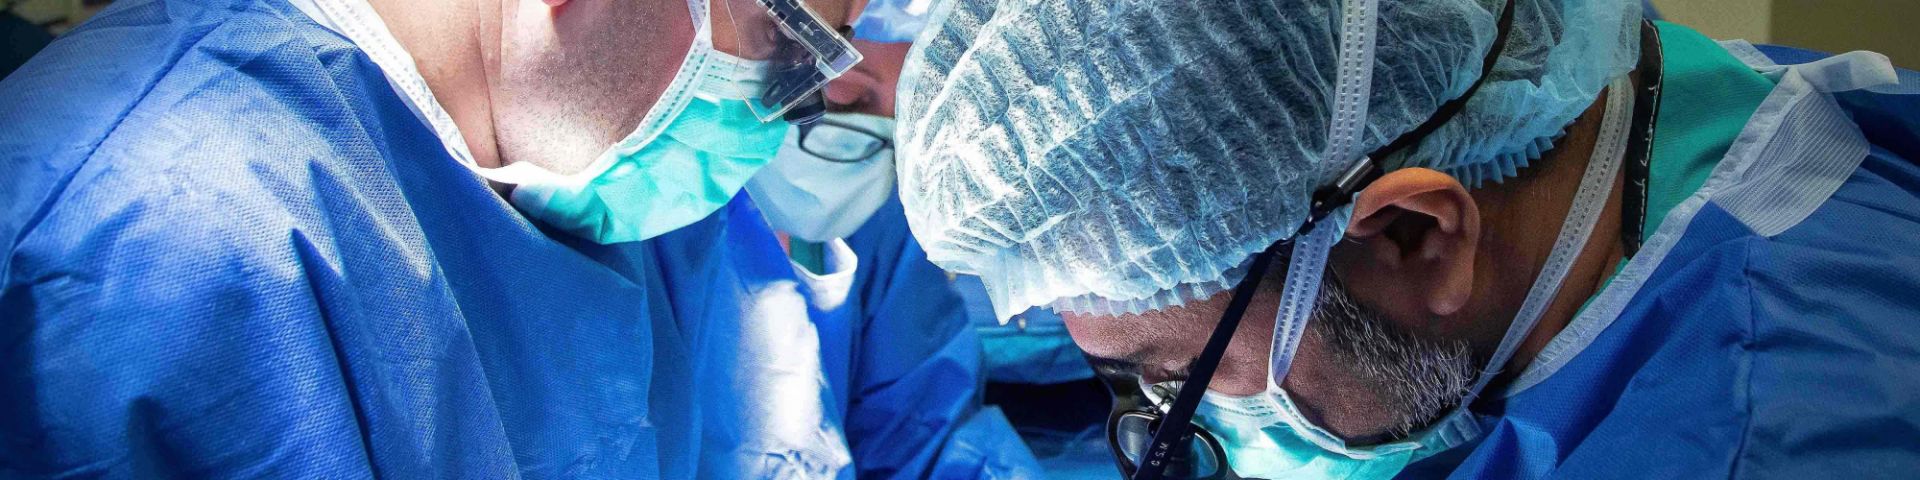 Rare kidney auto-transplant performed at USA Health University Hospital